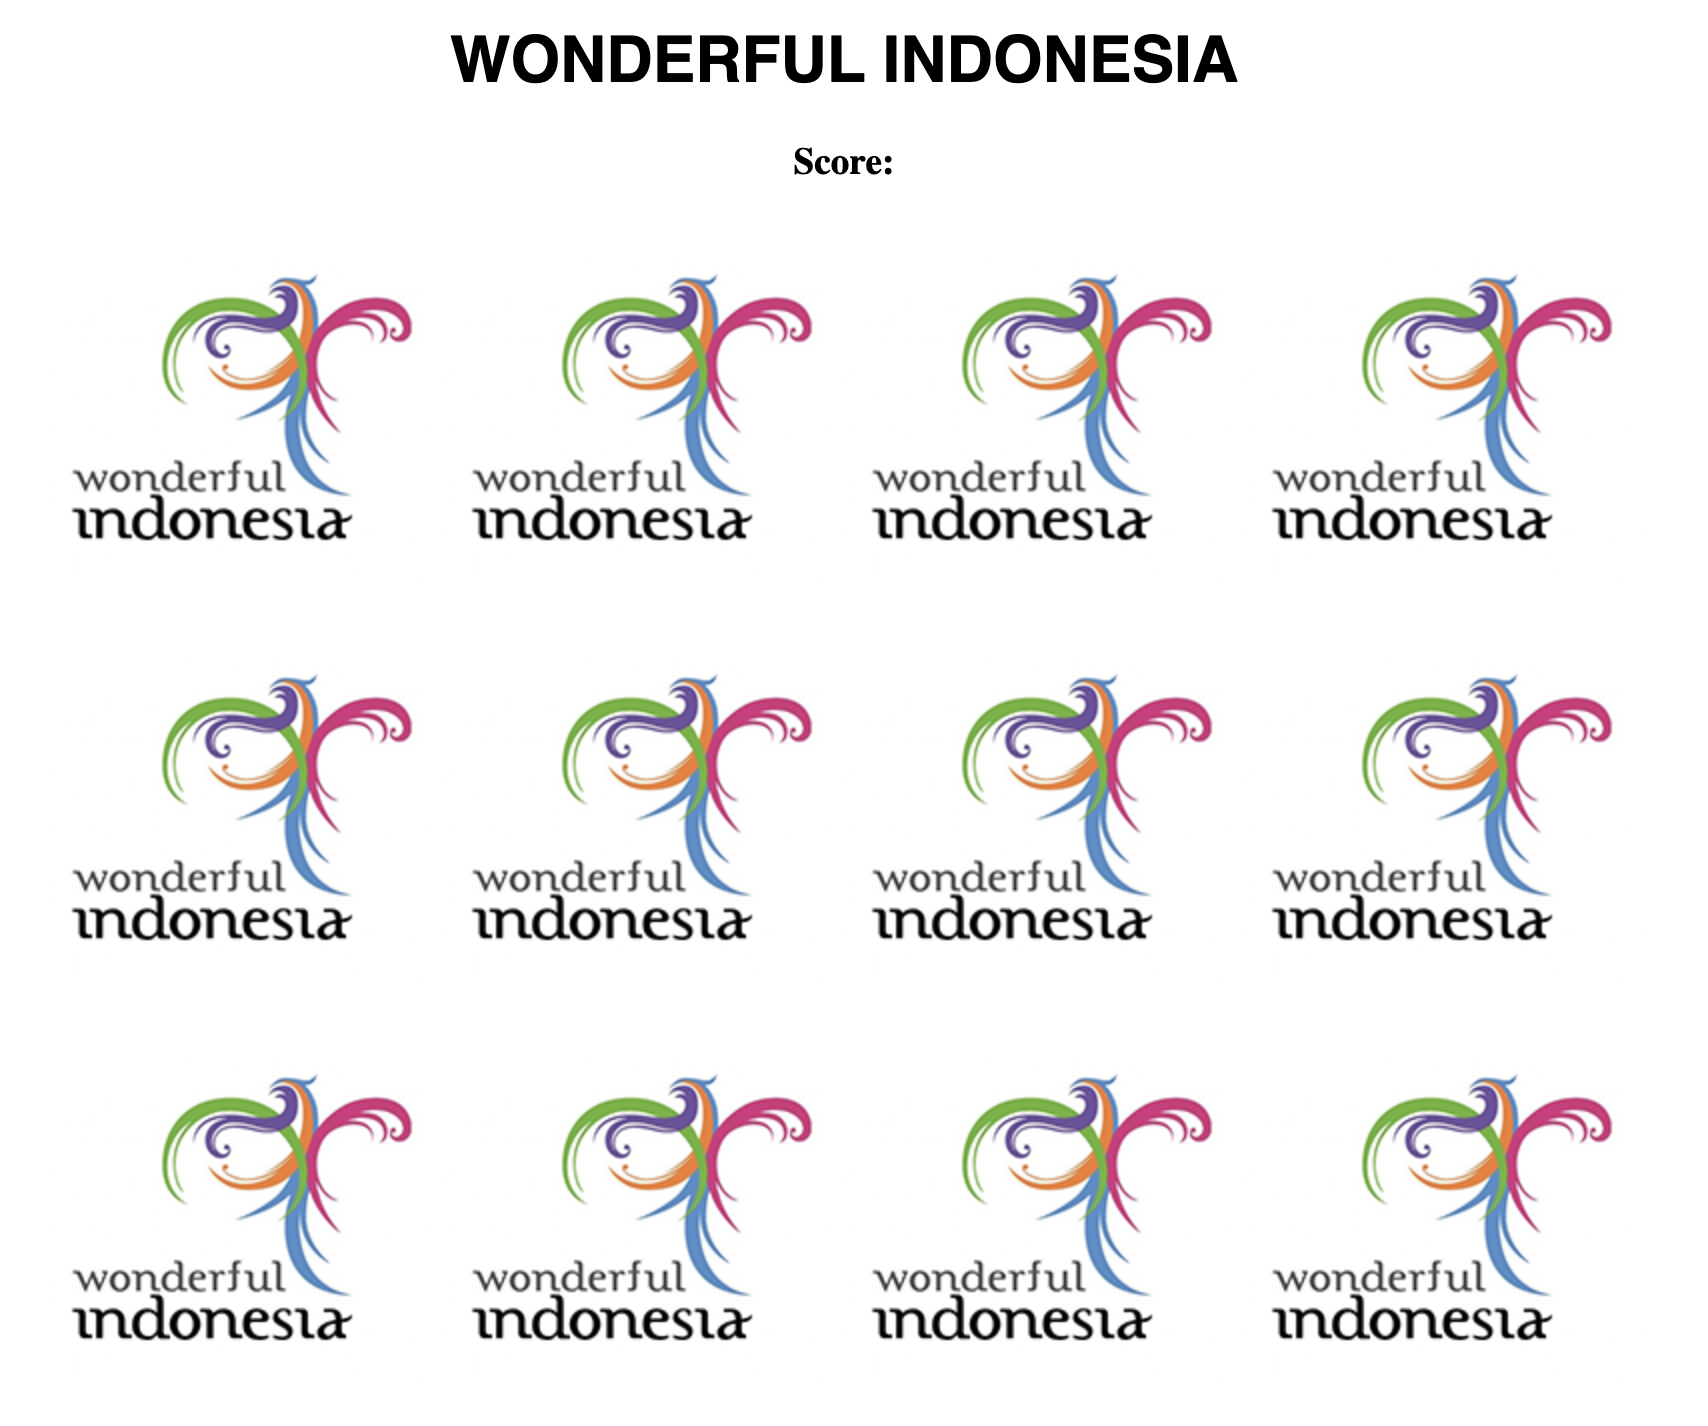 wonderful-indonesia